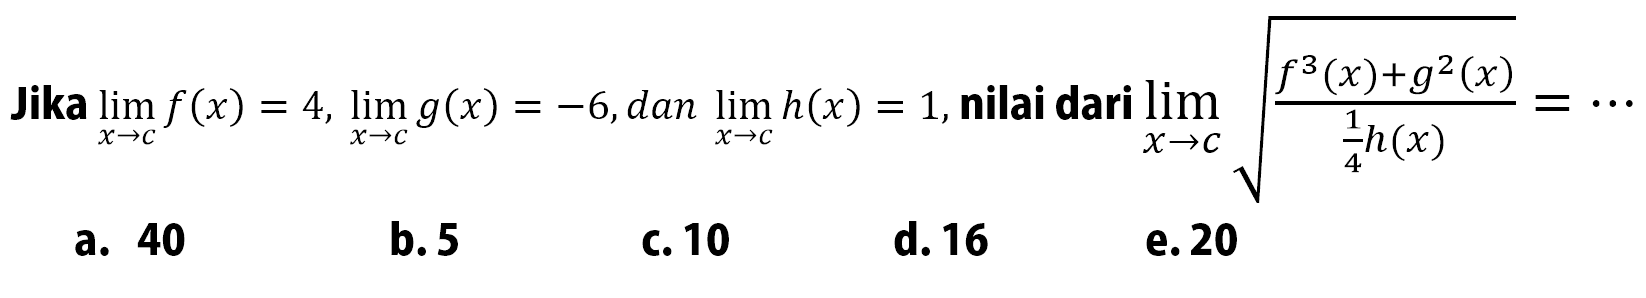 Jika lim x->c f(x)=4, lim x->c g(x)=-6, dan lim x->c h(x)=1, nilai dari lim x->c akar((f^3(x)+g^2(x))/(1/4h(x)))=